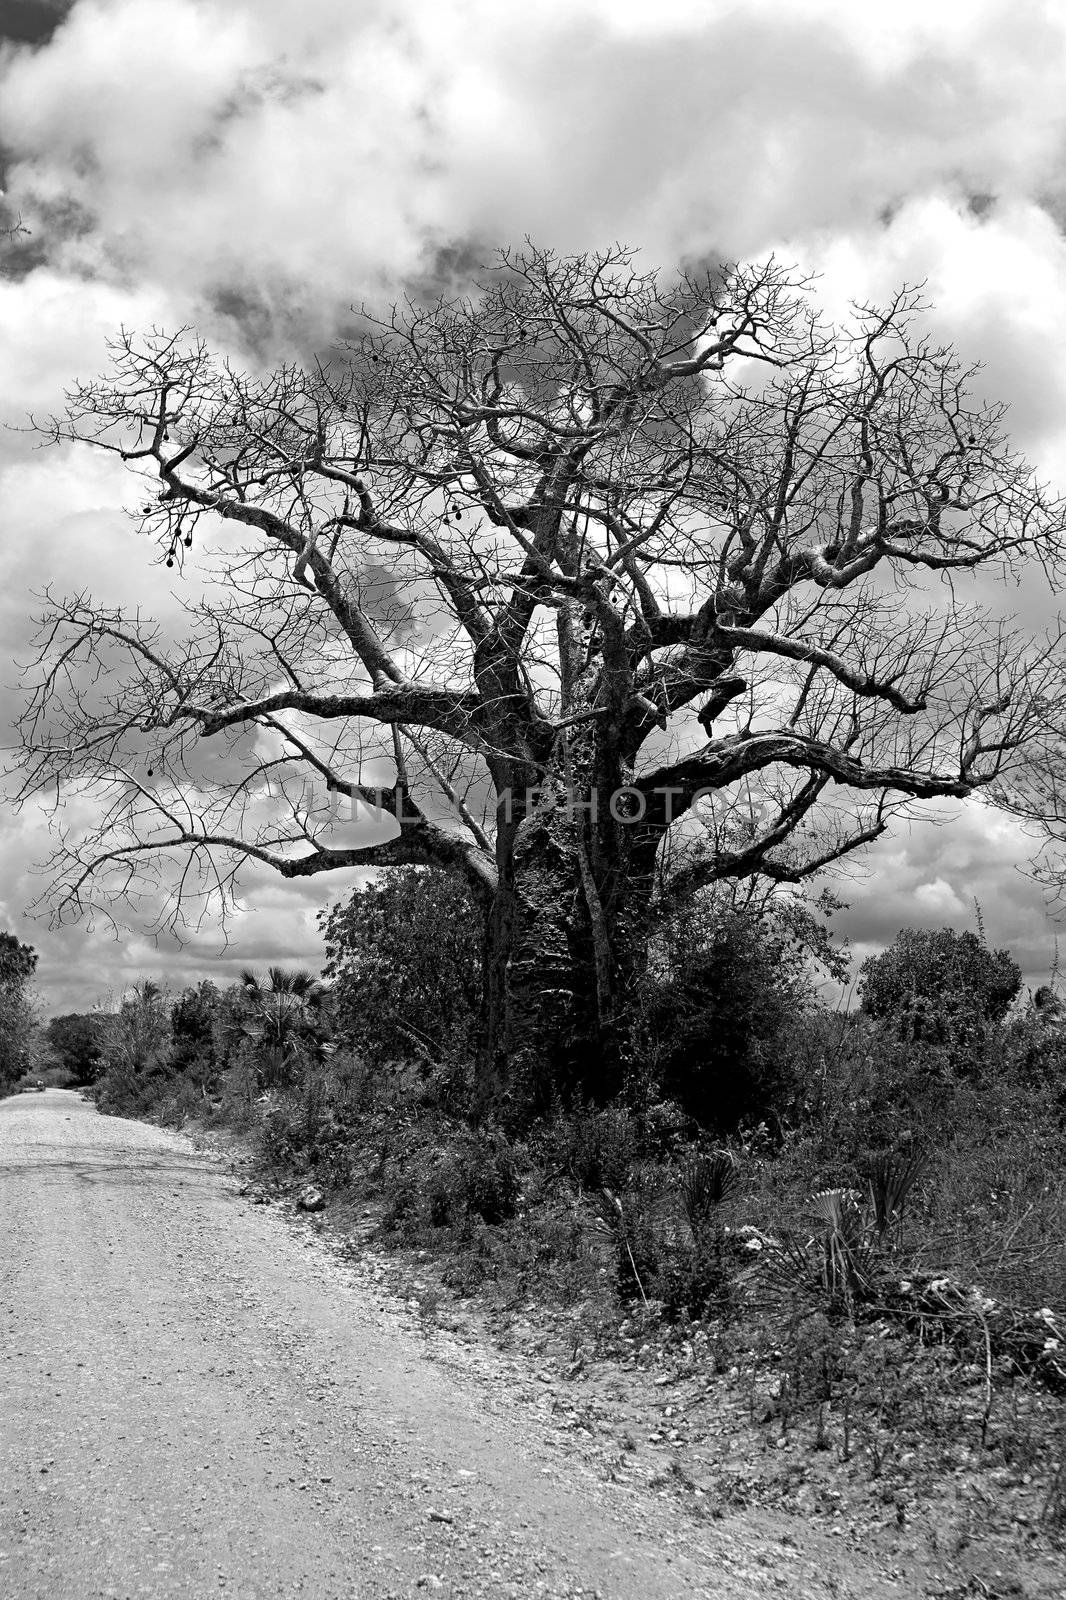 Baobab tree by kjorgen